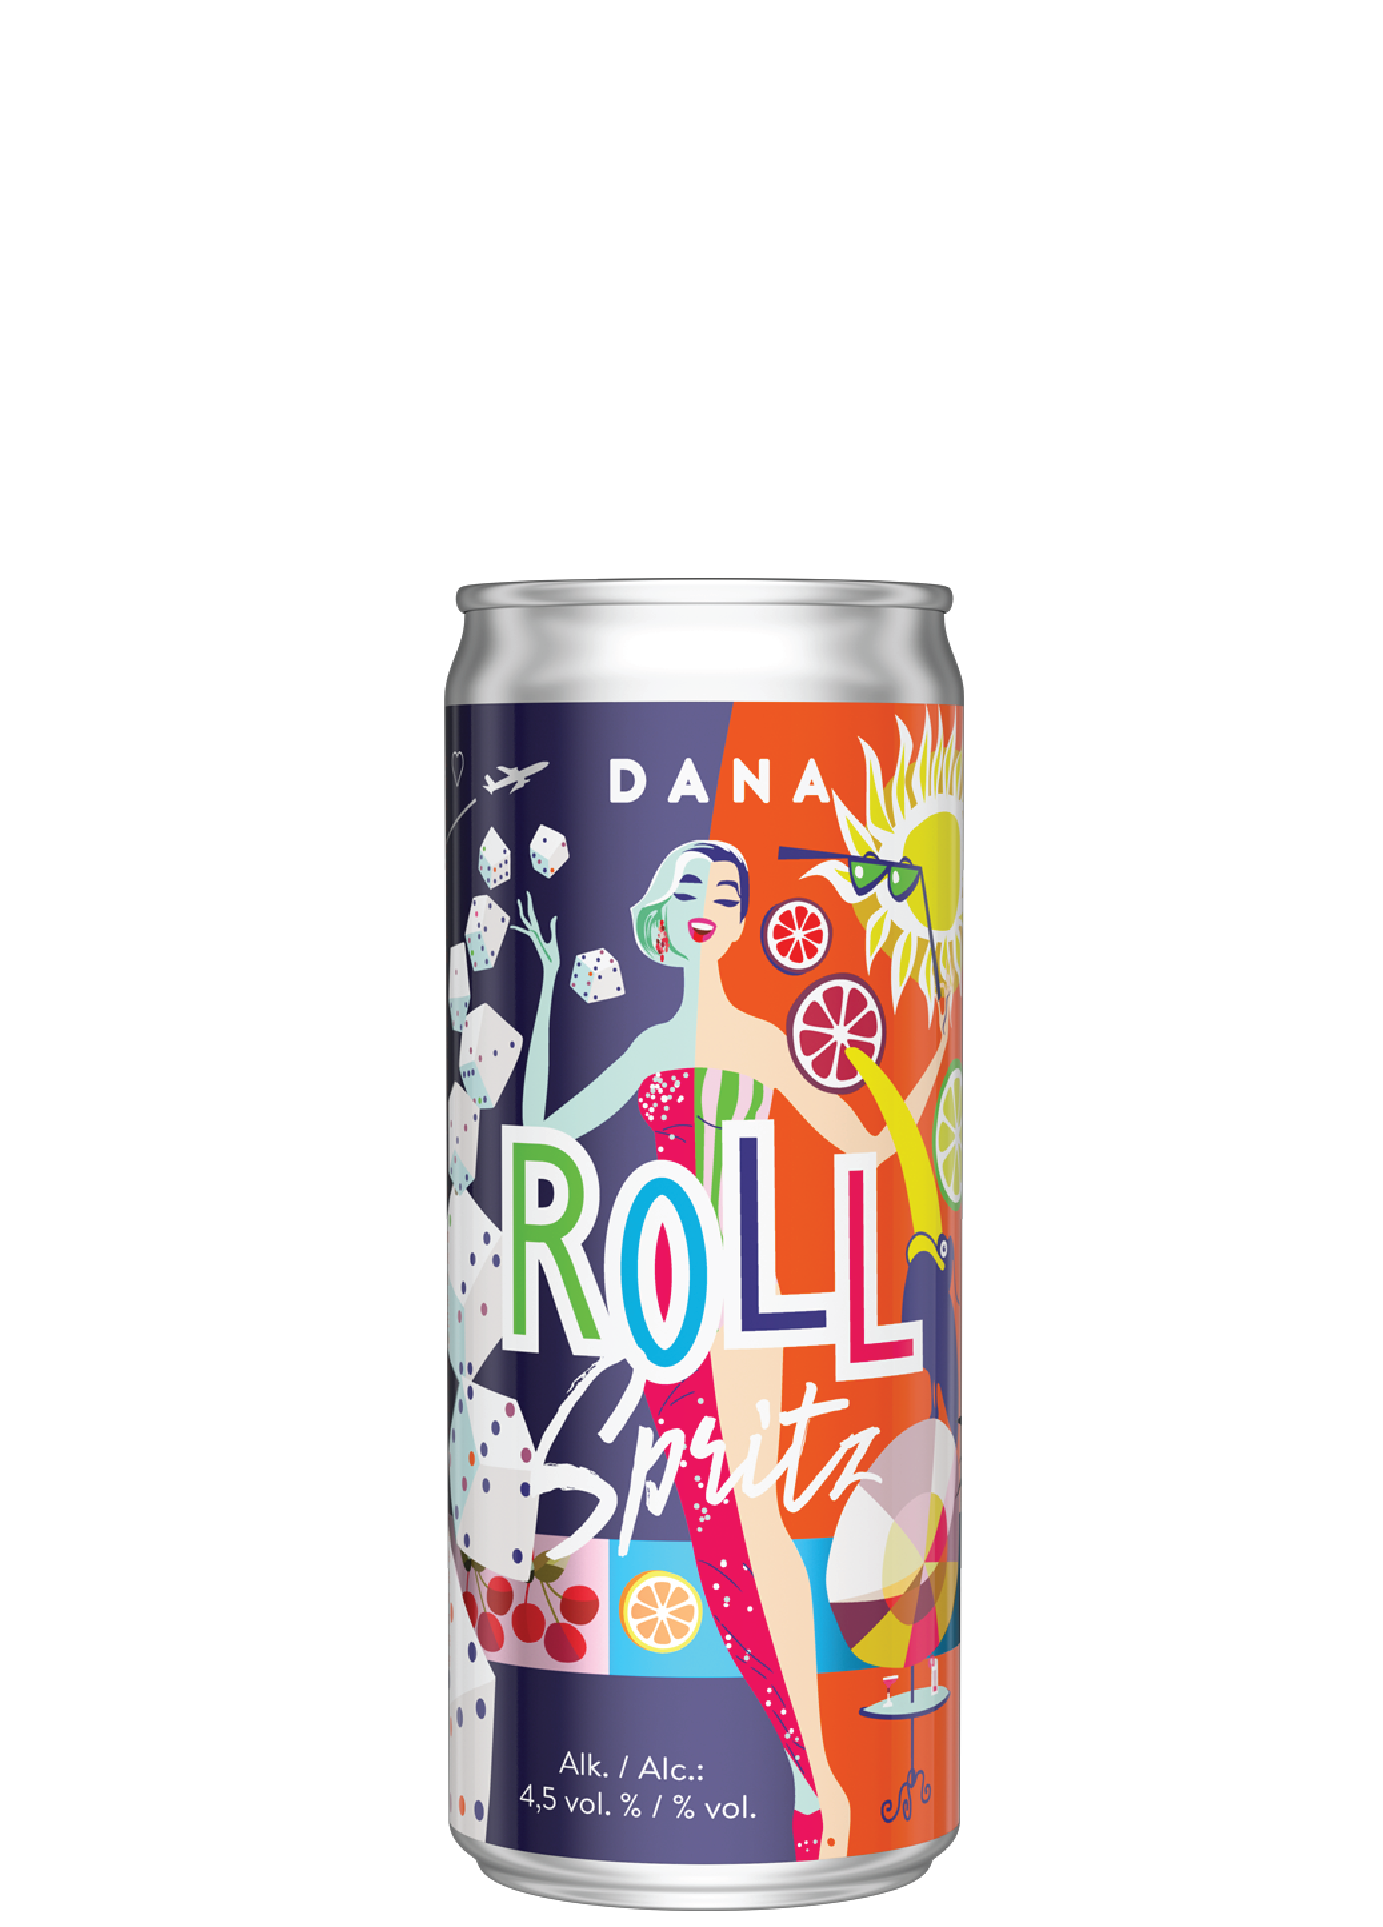 Dana Roll Spritz, alk: 0,0 vol. %